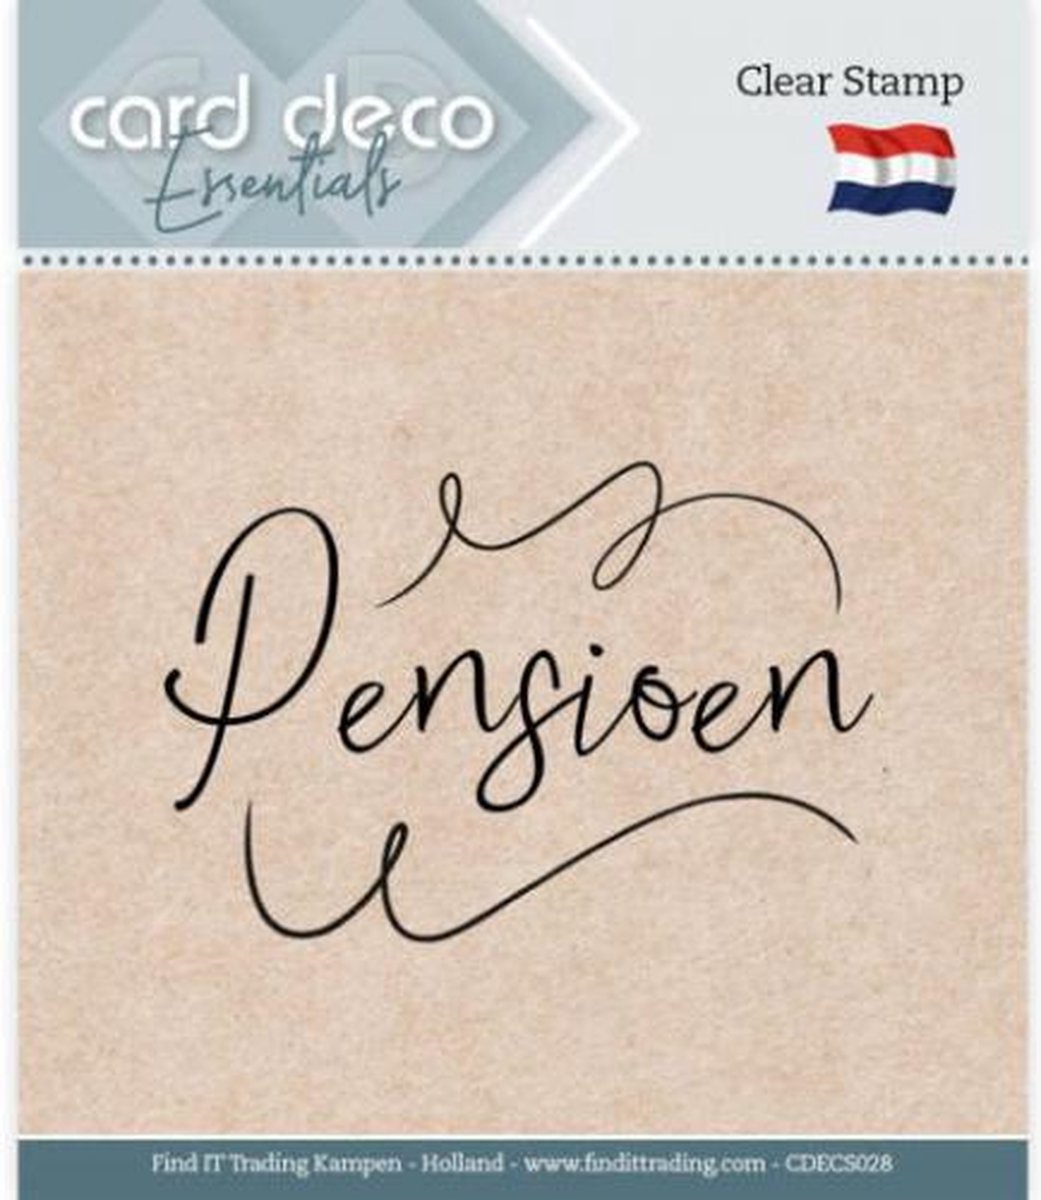 Card Deco Essentials - Clear Stamps - Pensioen